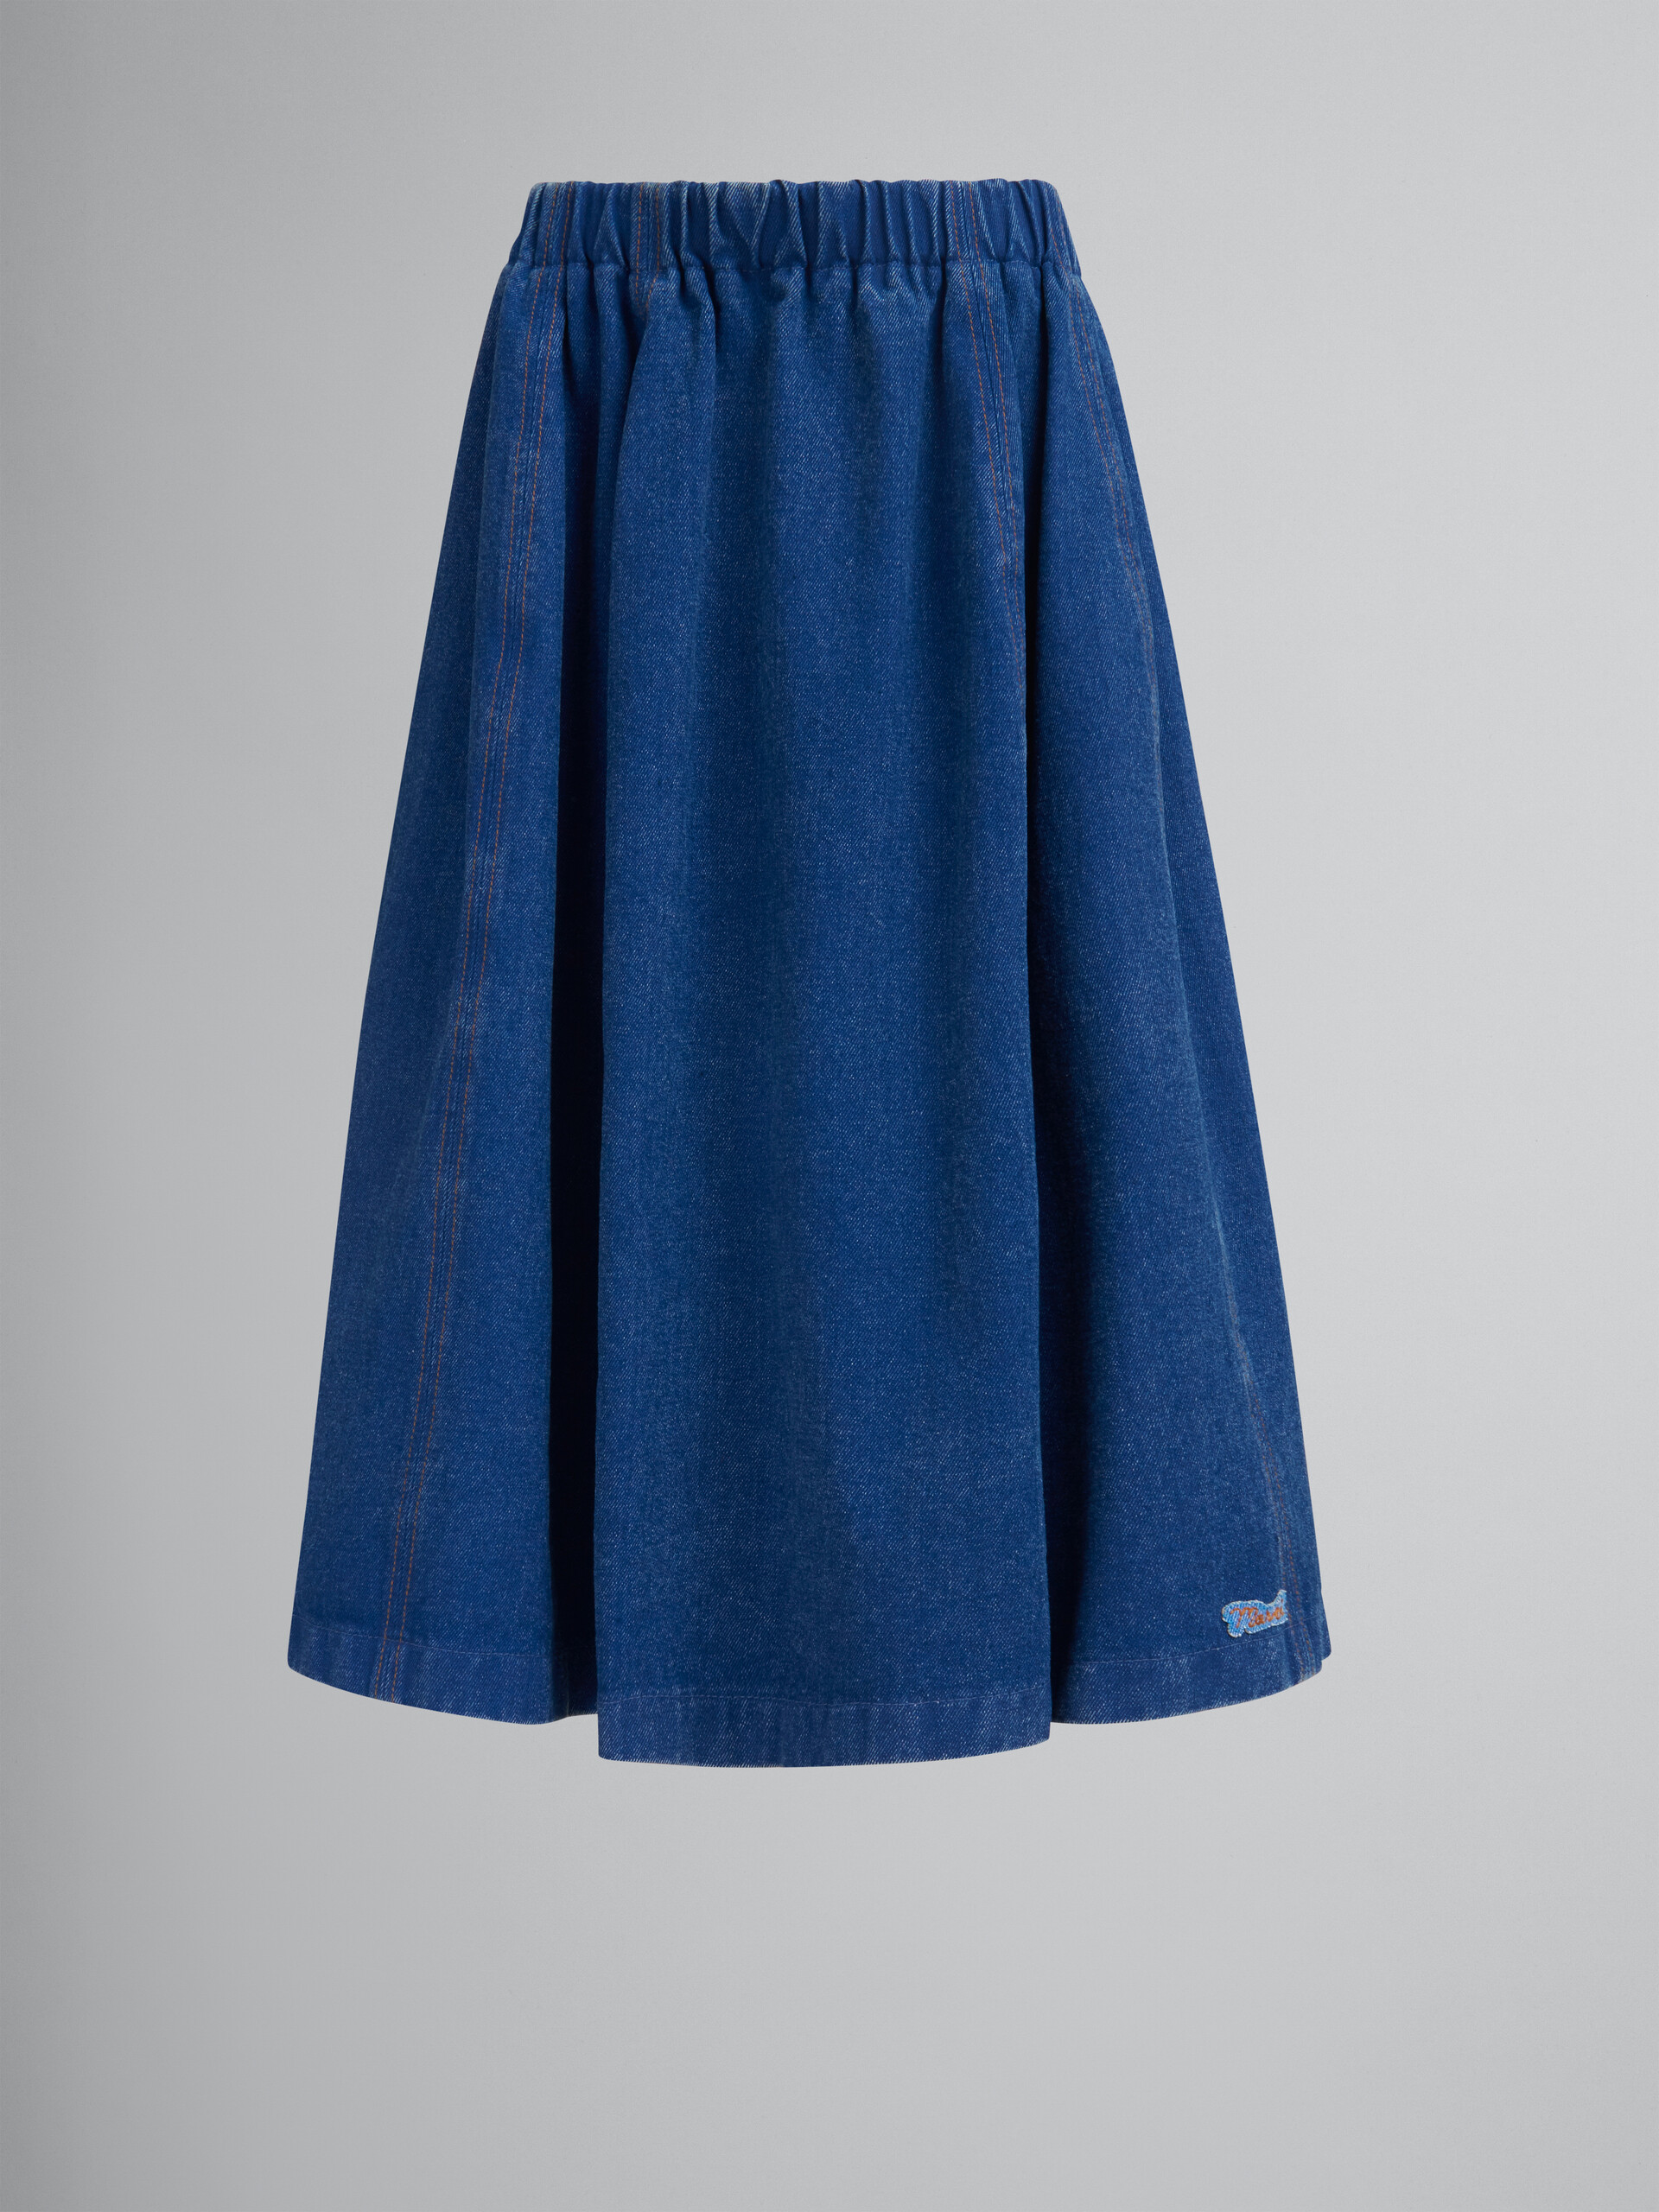 Blue organic denim elasticated midi skirt - Skirts - Image 1